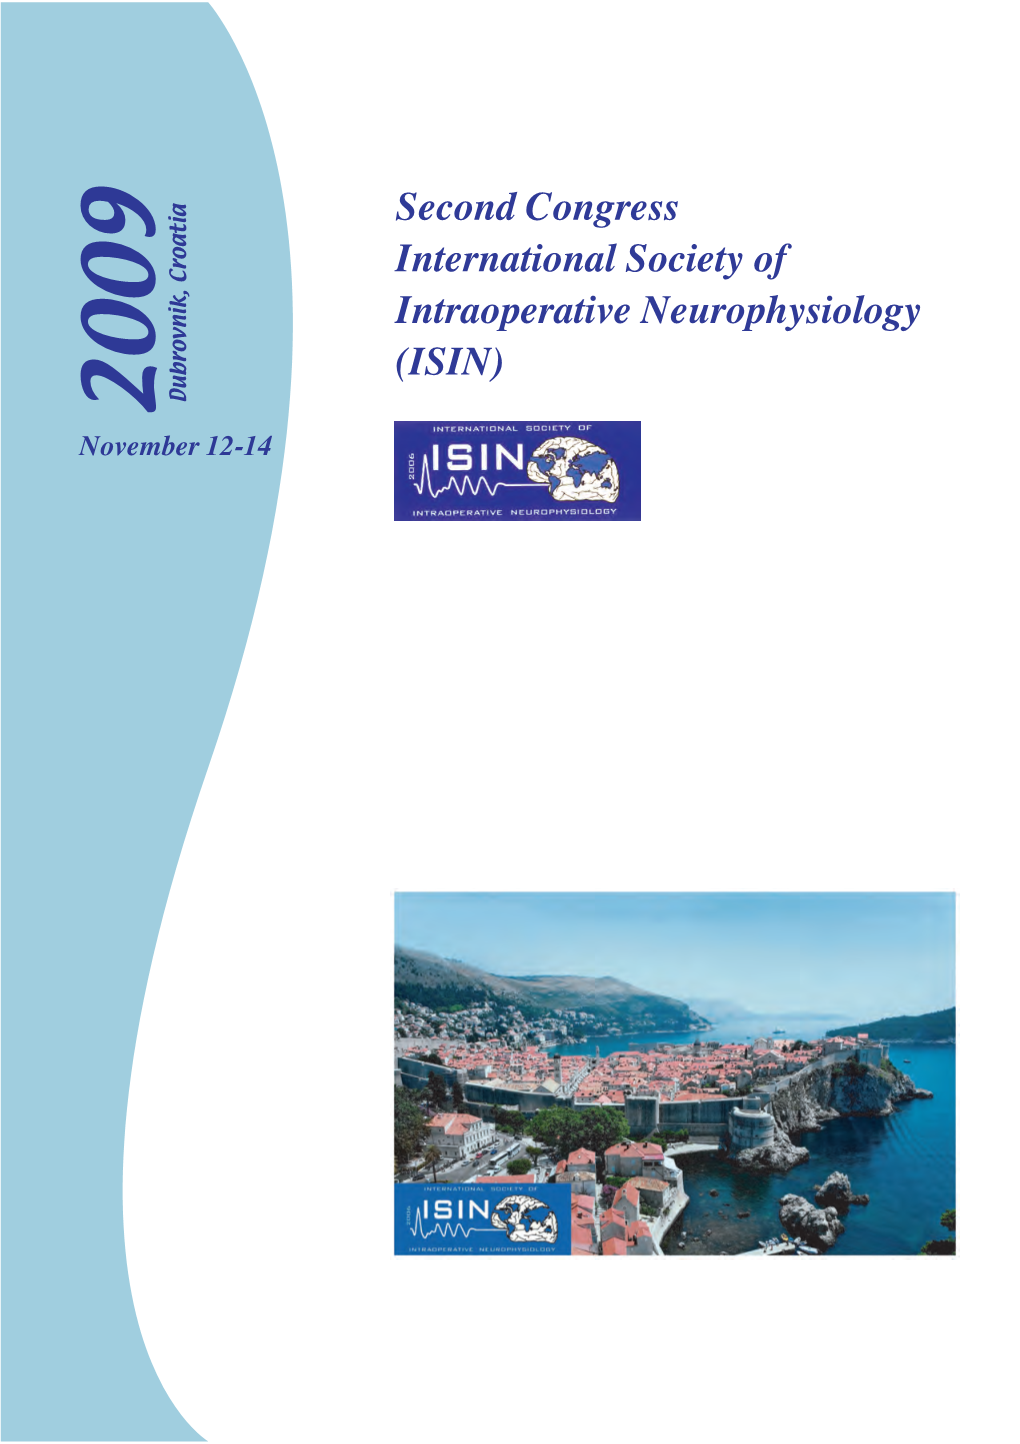 Second Congress International Society of Intraoperative Neurophysiology (ISIN) Dubrovnik, Croatia Dubrovnik, 2009 November 12-14